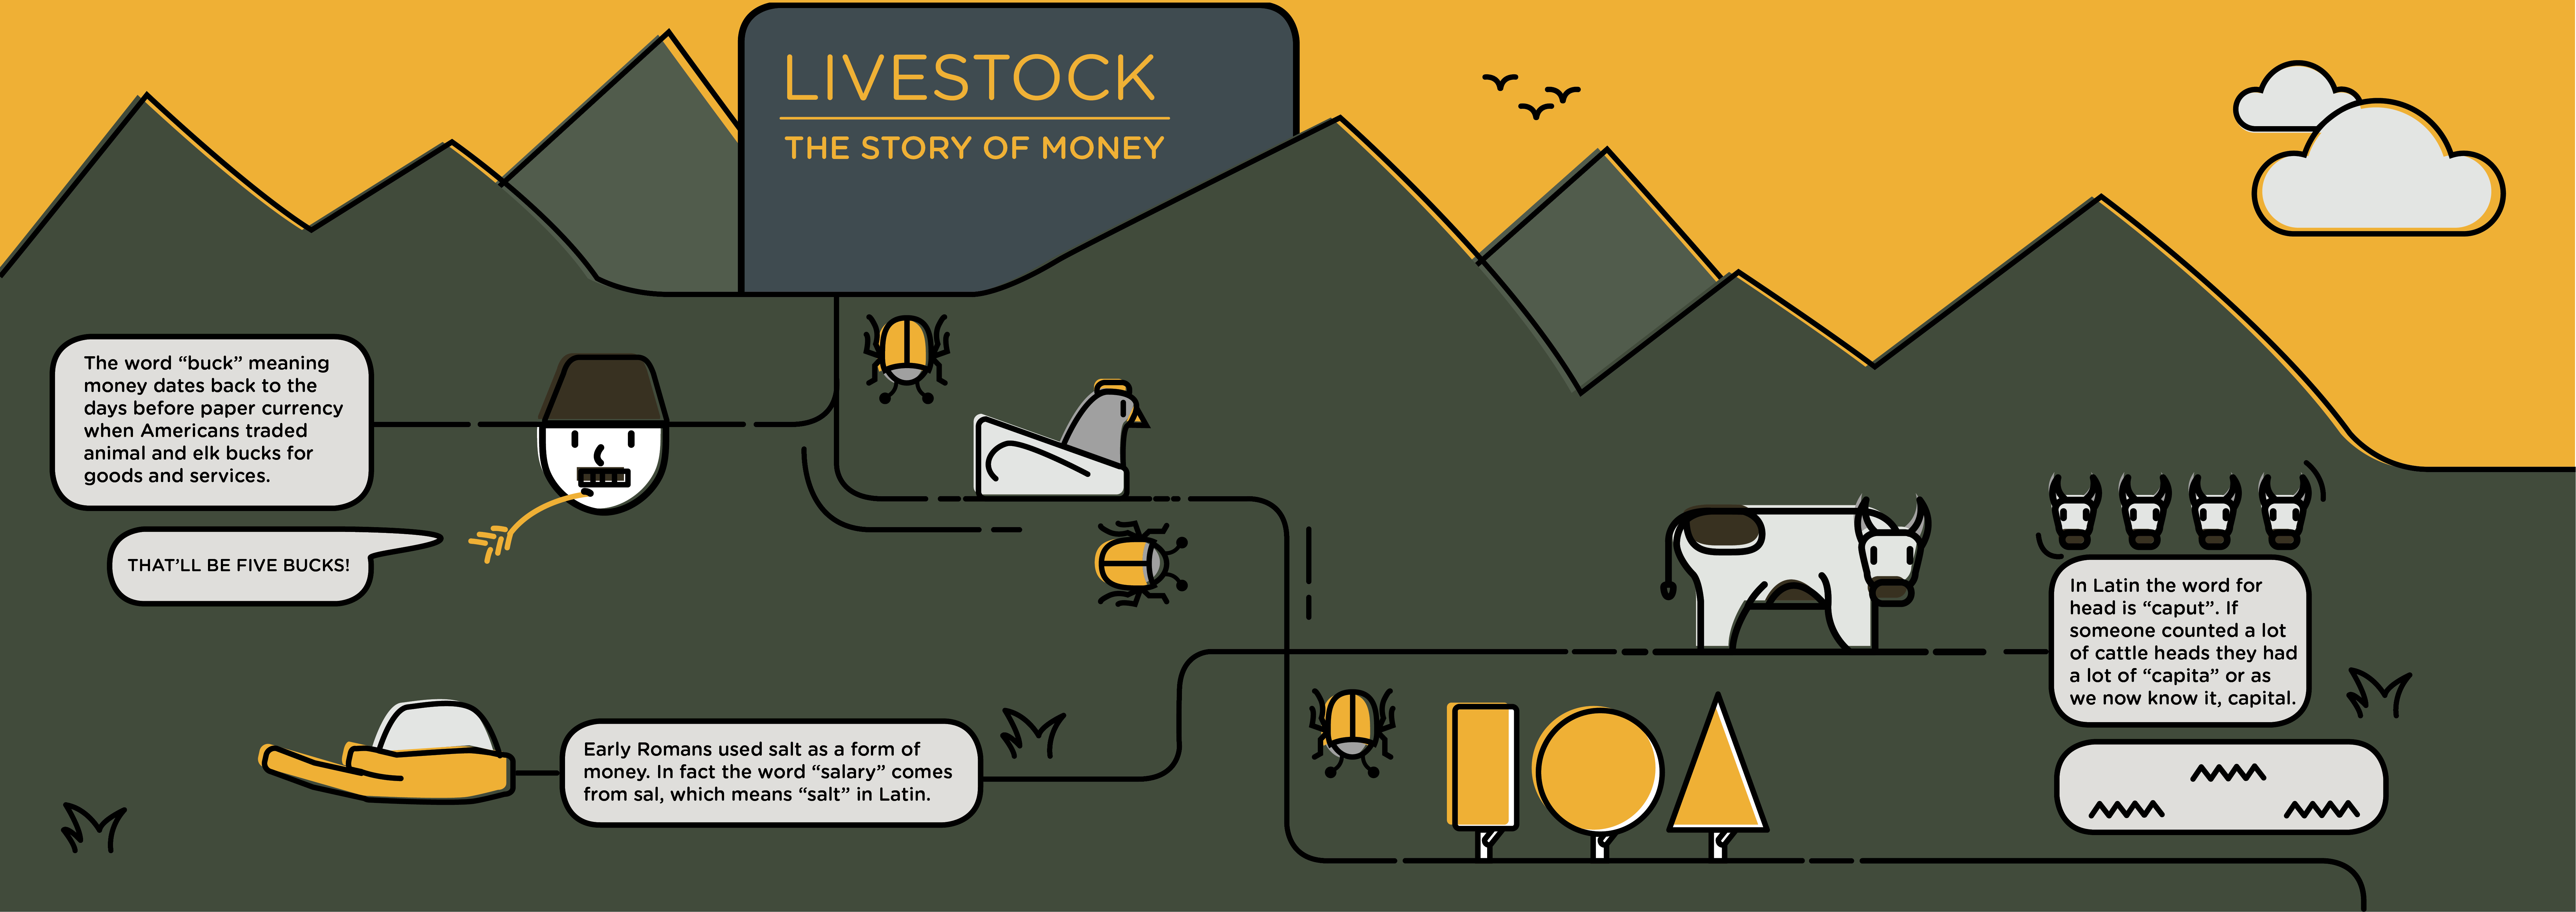 Visual of The Story of Money: Livestock